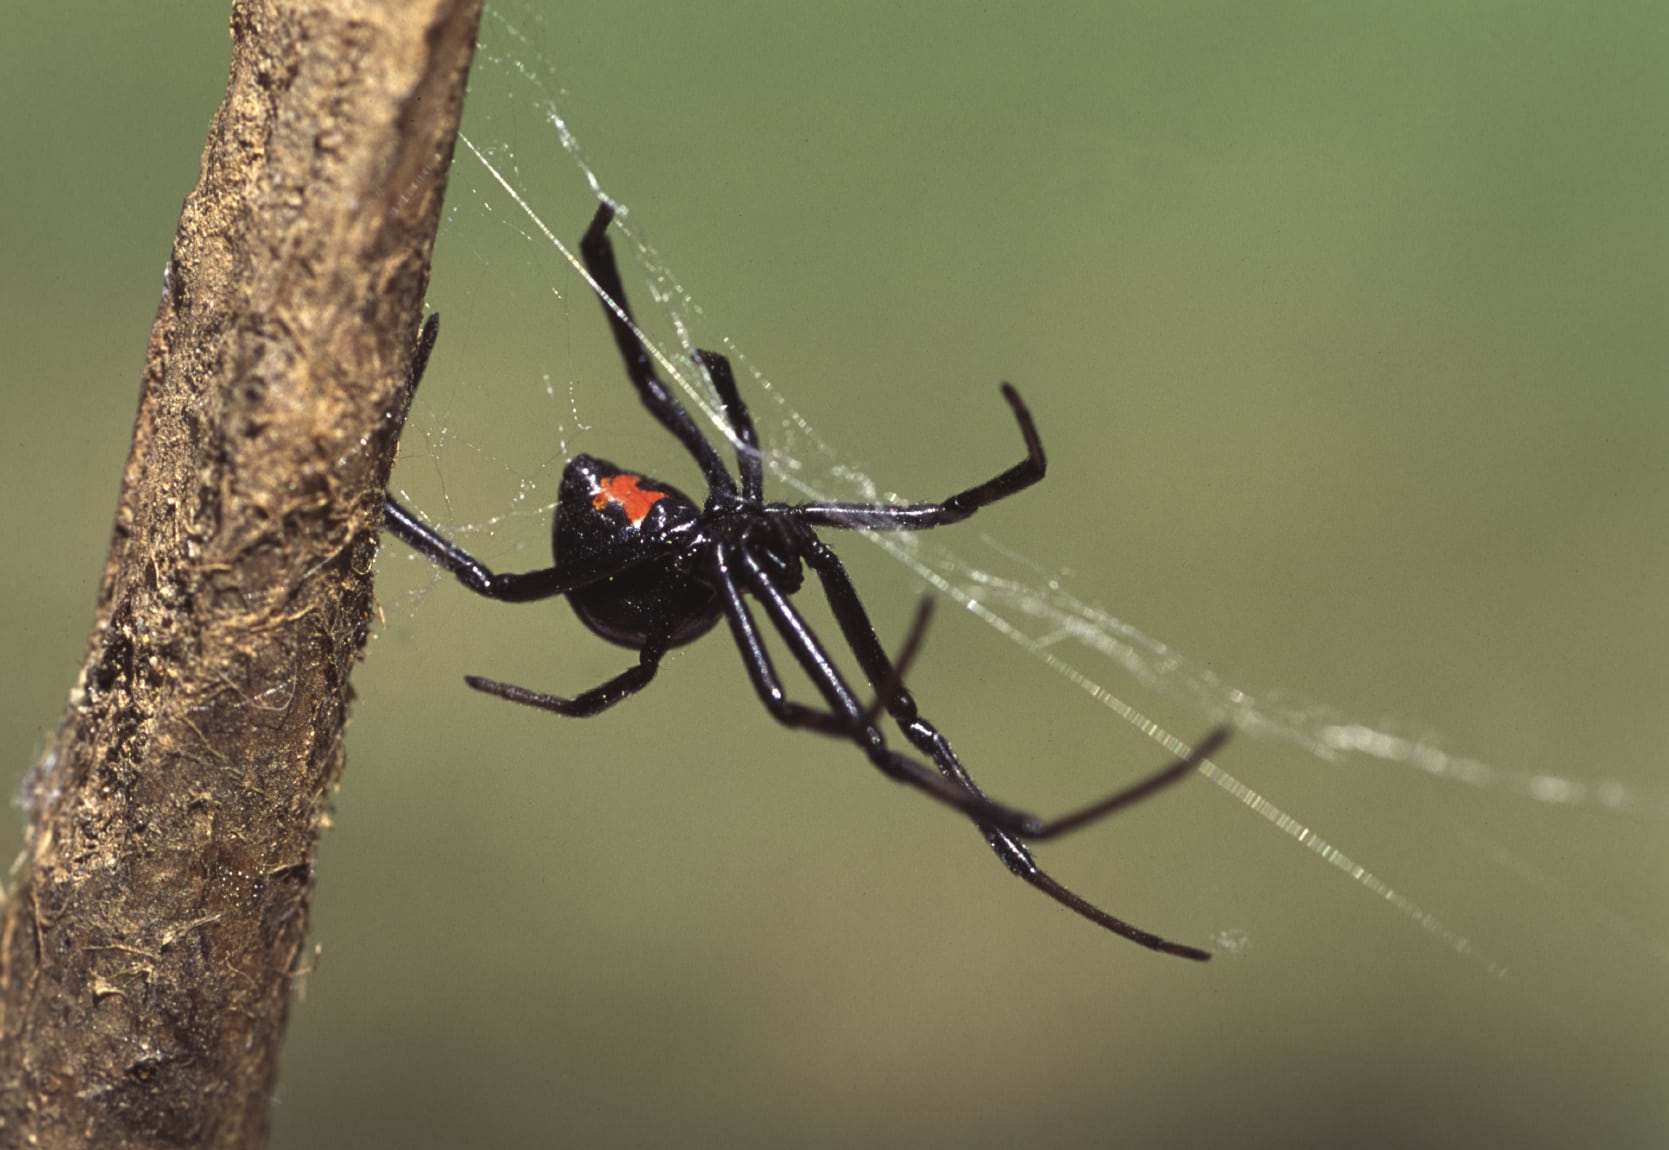 Female black widow spider showing hourglass pattern